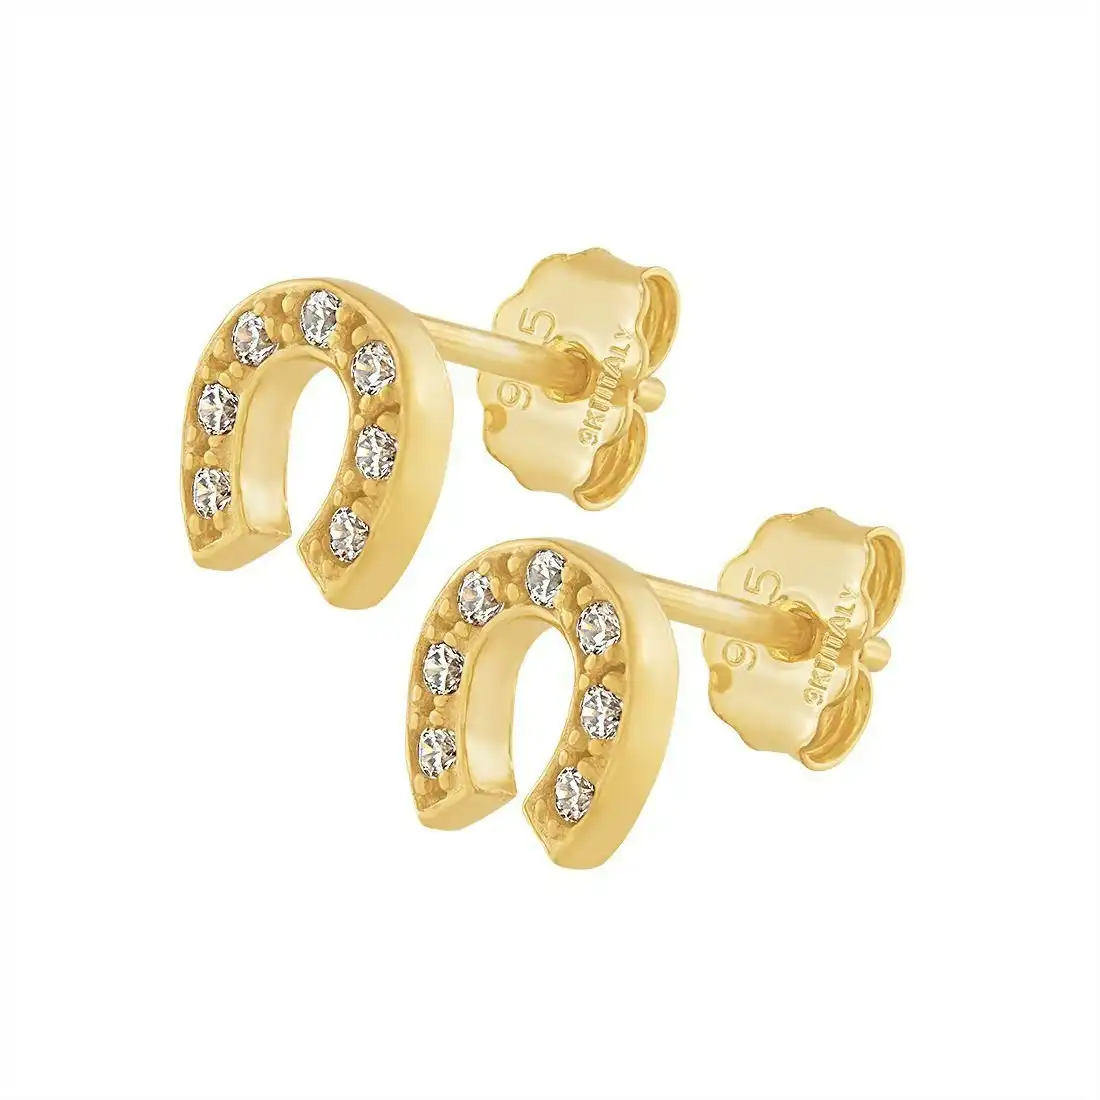 9ct Yellow Gold Silver Infused Horseshoe Stud Earrings with Cubic Zircona